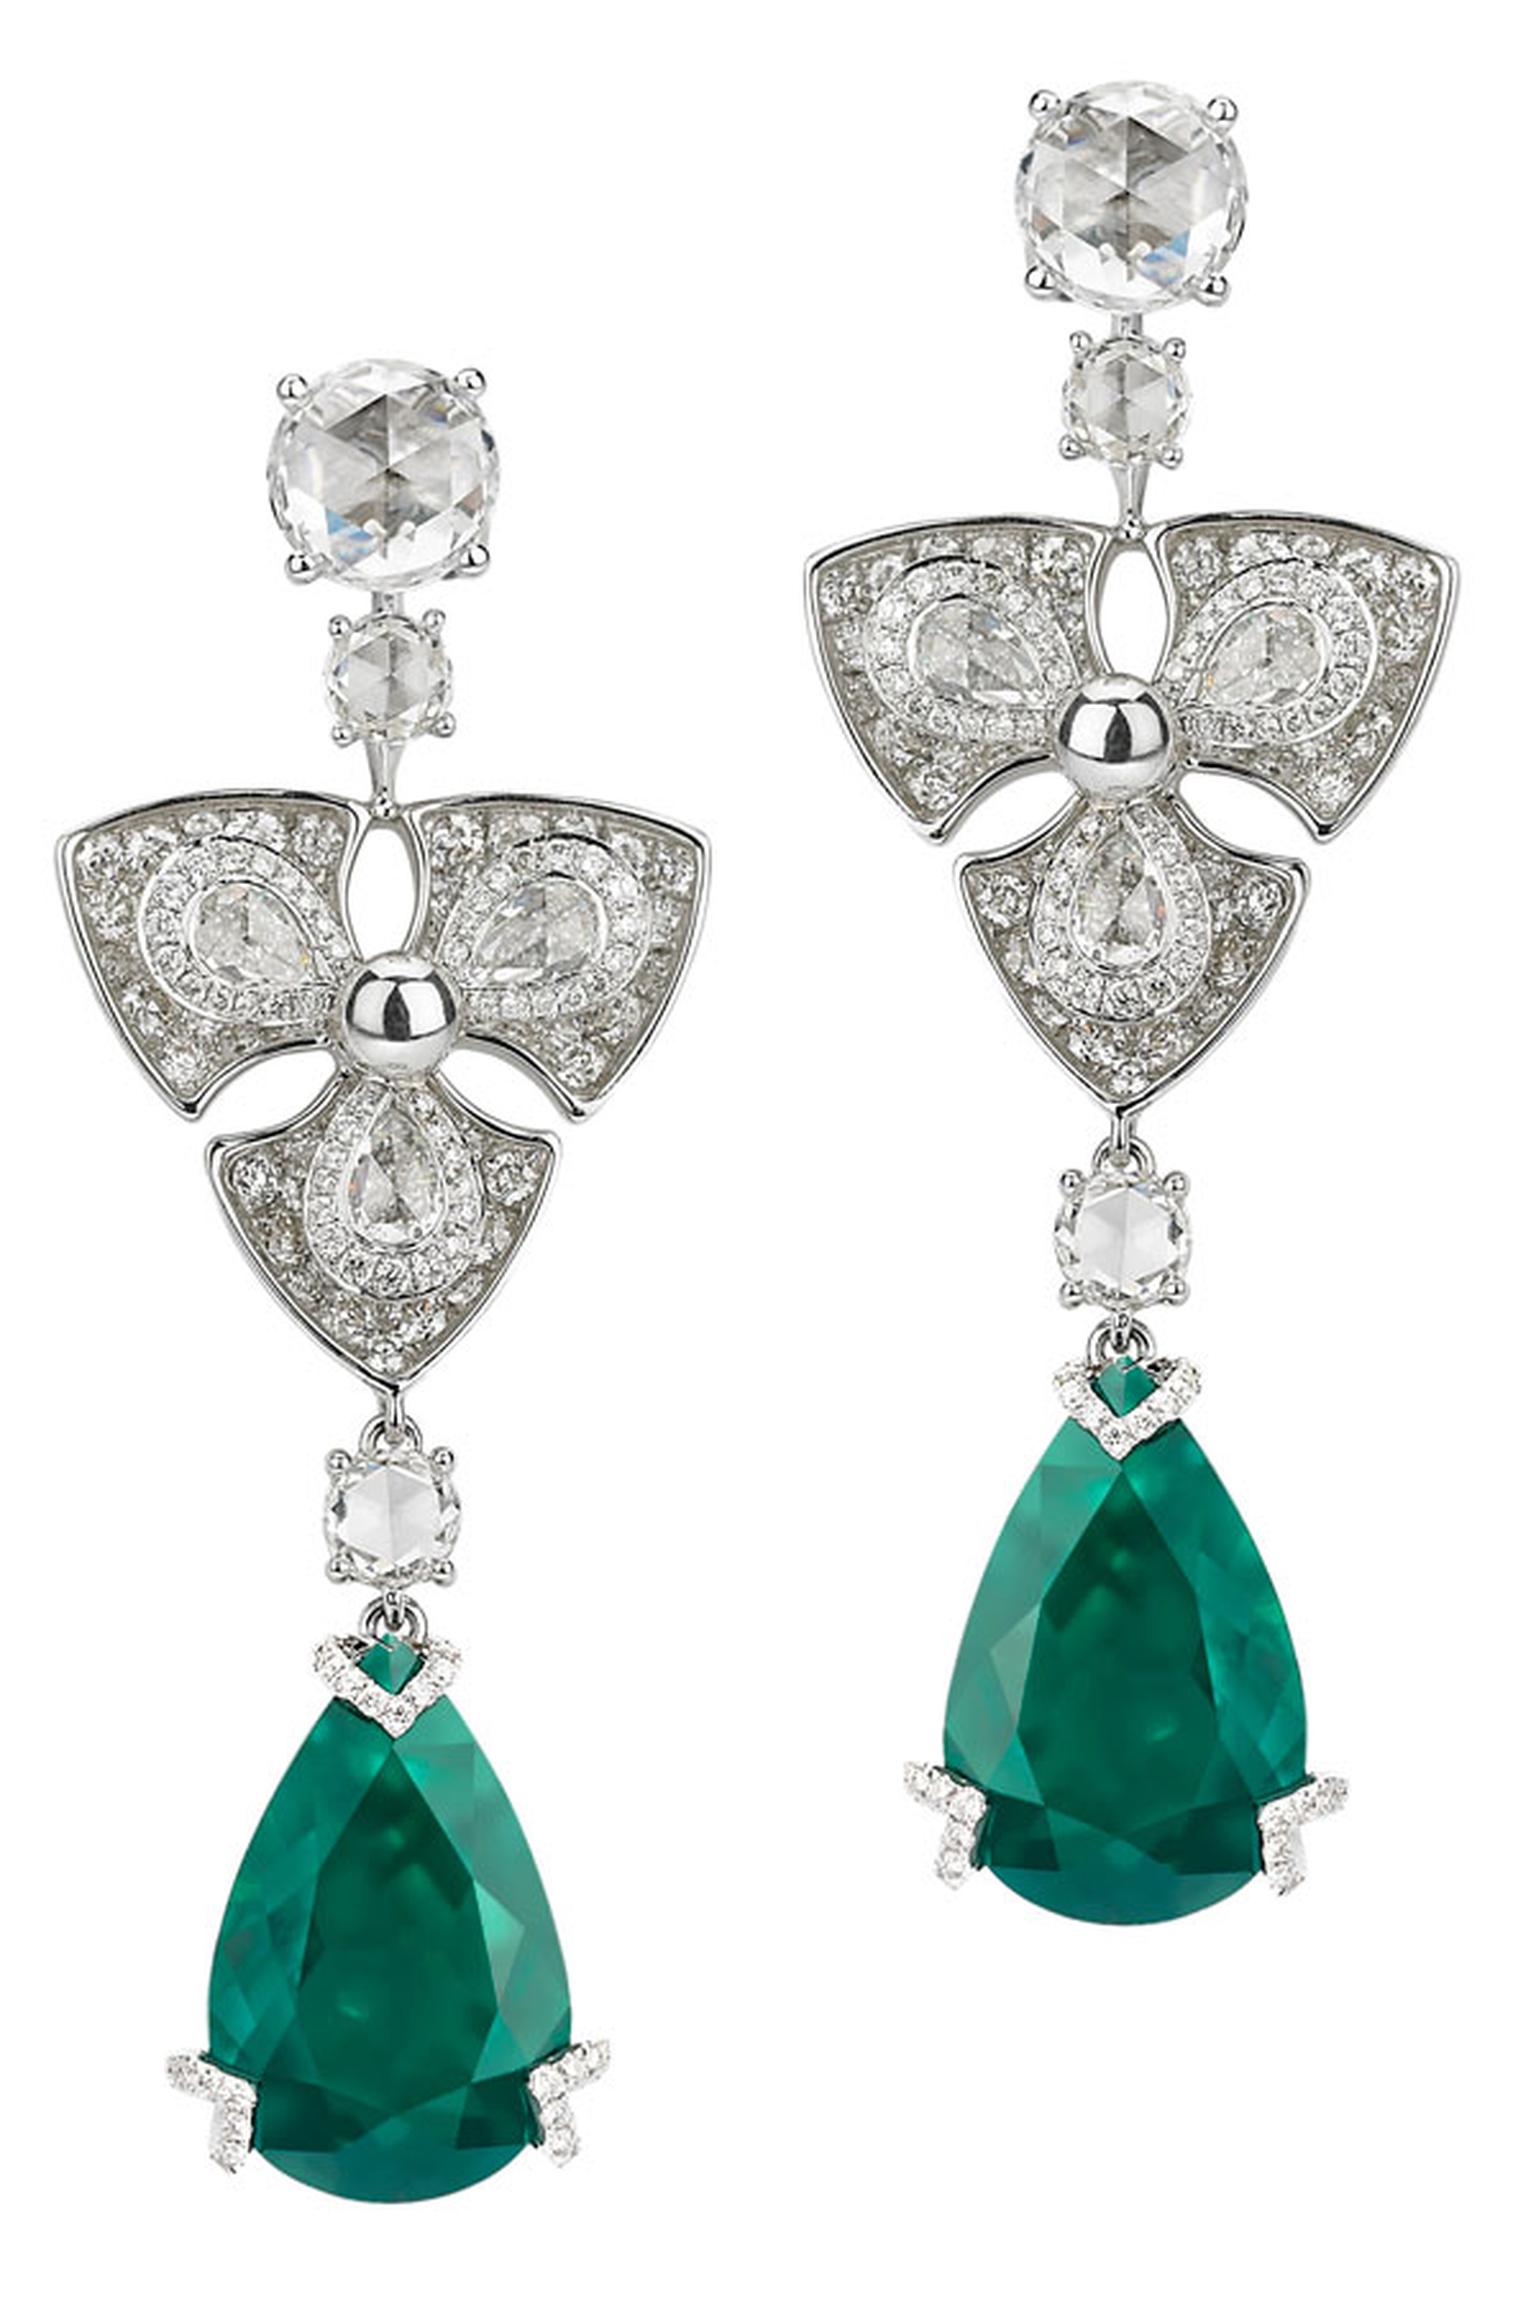 Avakian-pear-shape-emerald-earrings.jpg